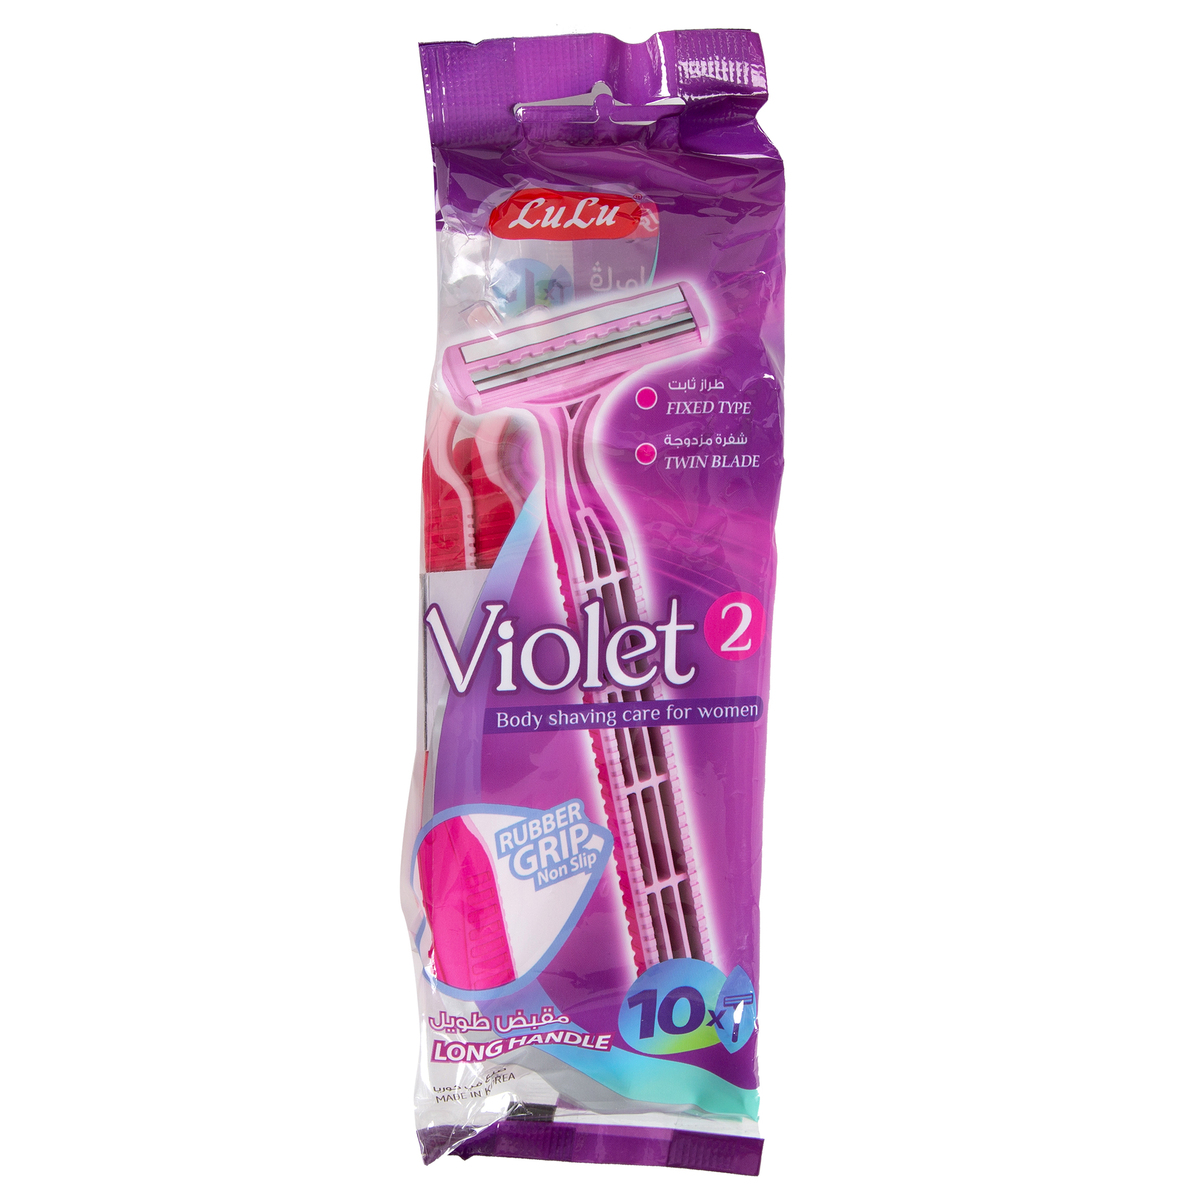 LuLu Violet Razor 2 Blade Rubber Grip For Women 10 pcs